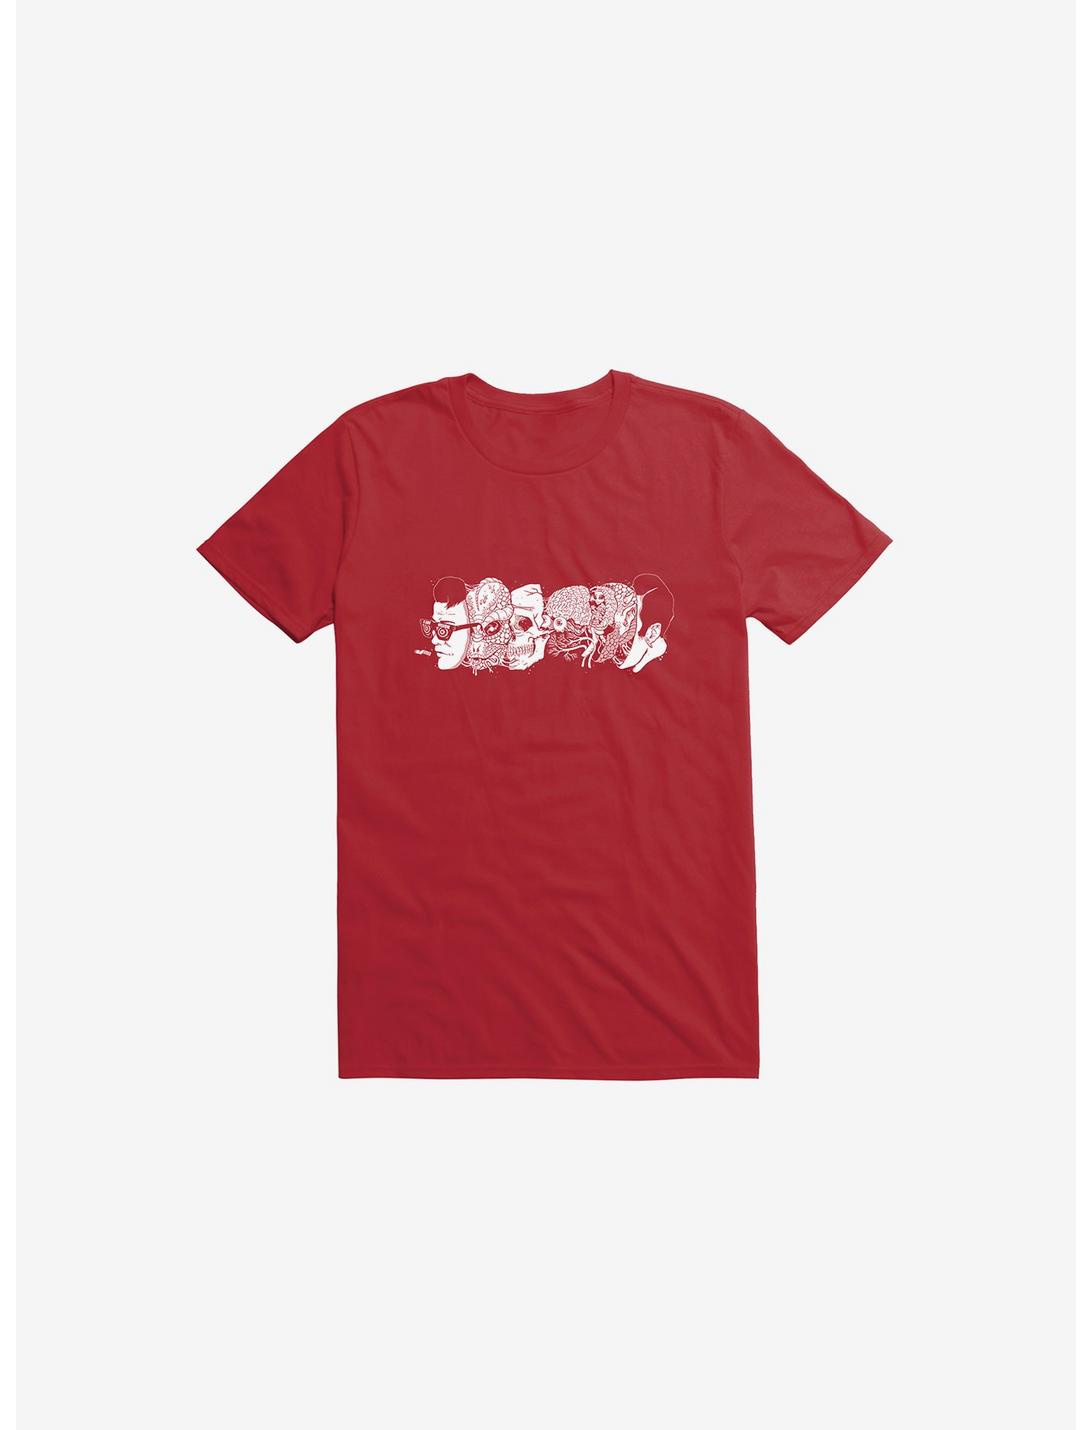 Reptoids Exist T-Shirt, RED, hi-res